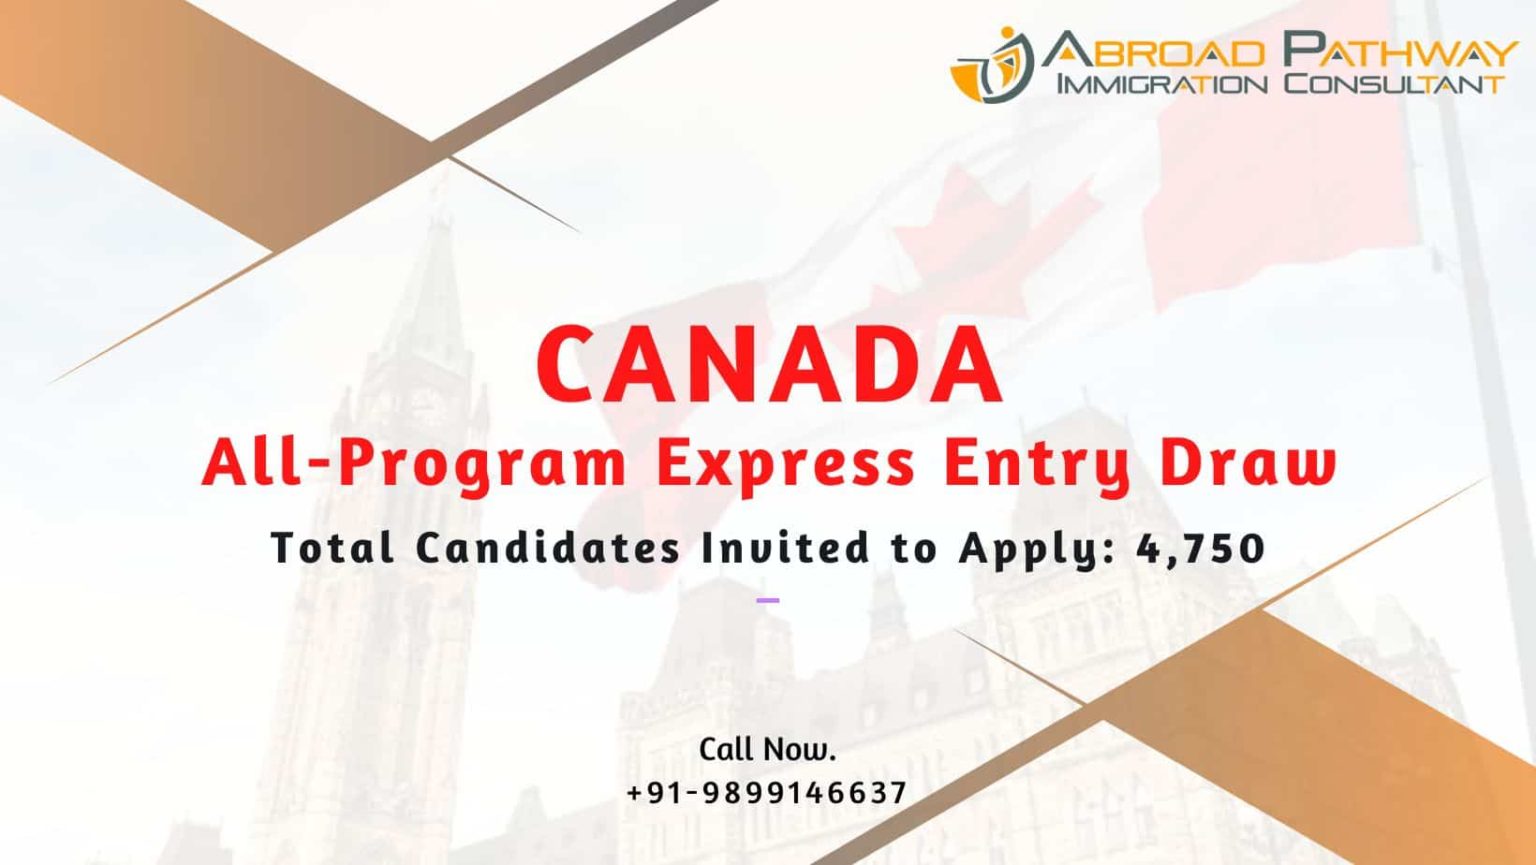 Canada invites 4750 candidates under All-Program draw